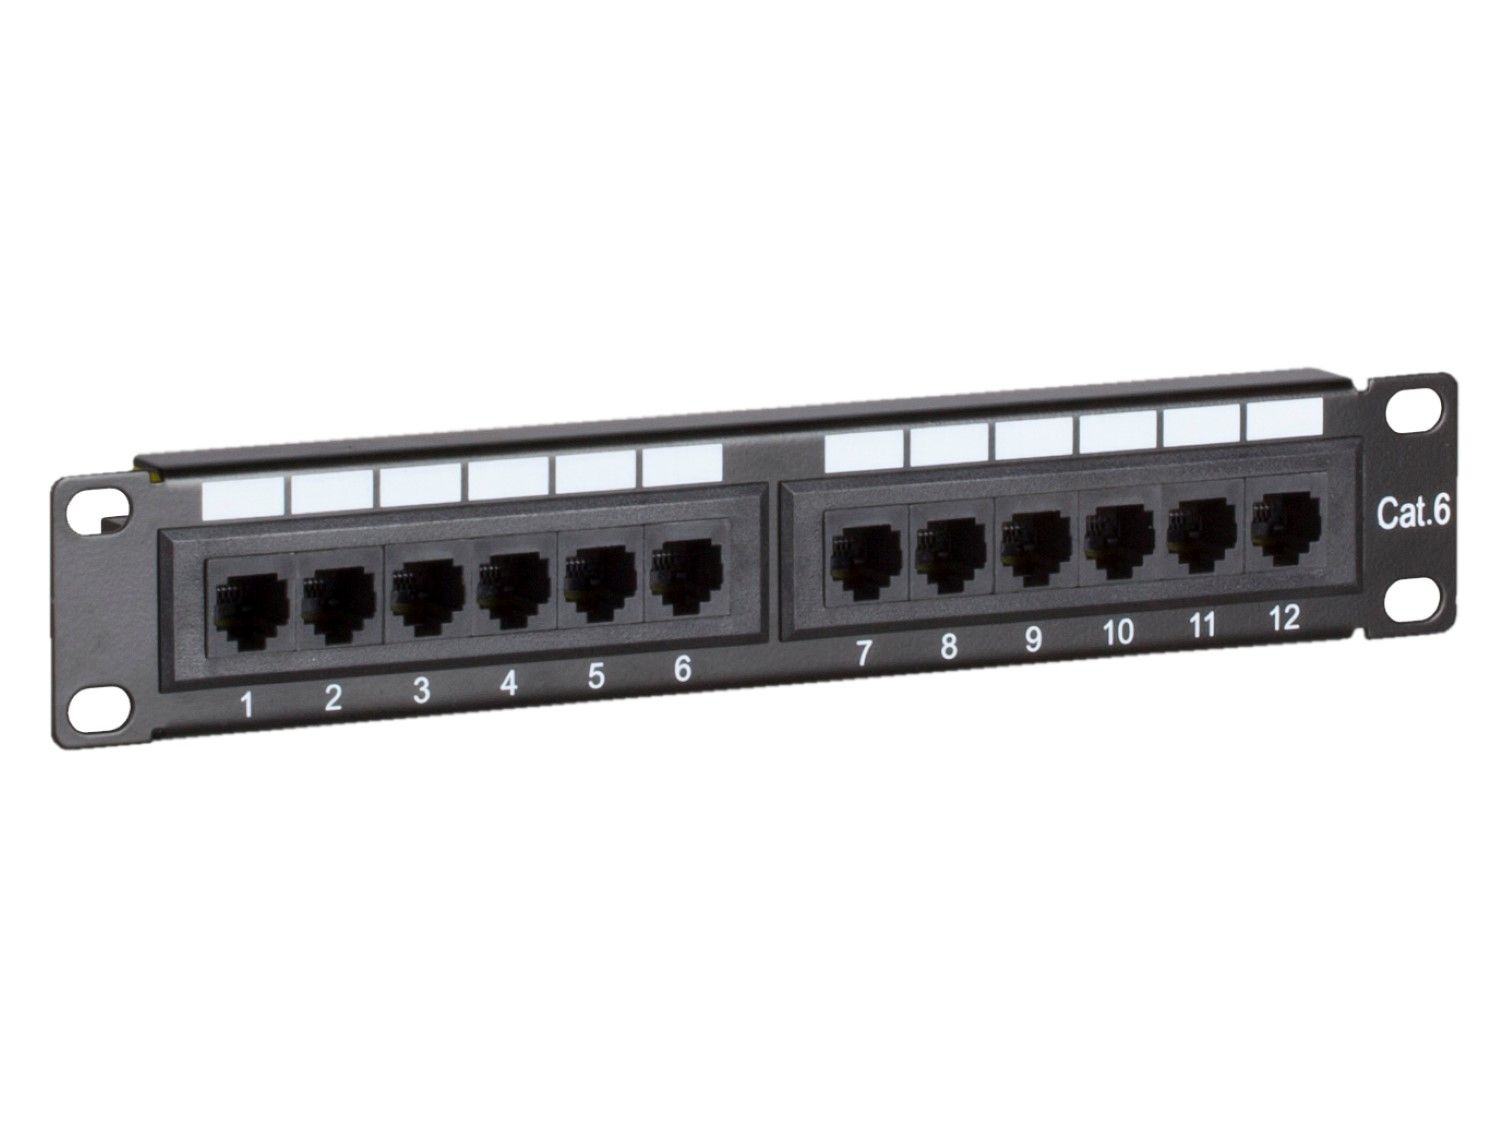 10” 1U 12 Port Way Cat6 Ethernet RJ45 Patch Panel Network Rack Mount Hub  Switch